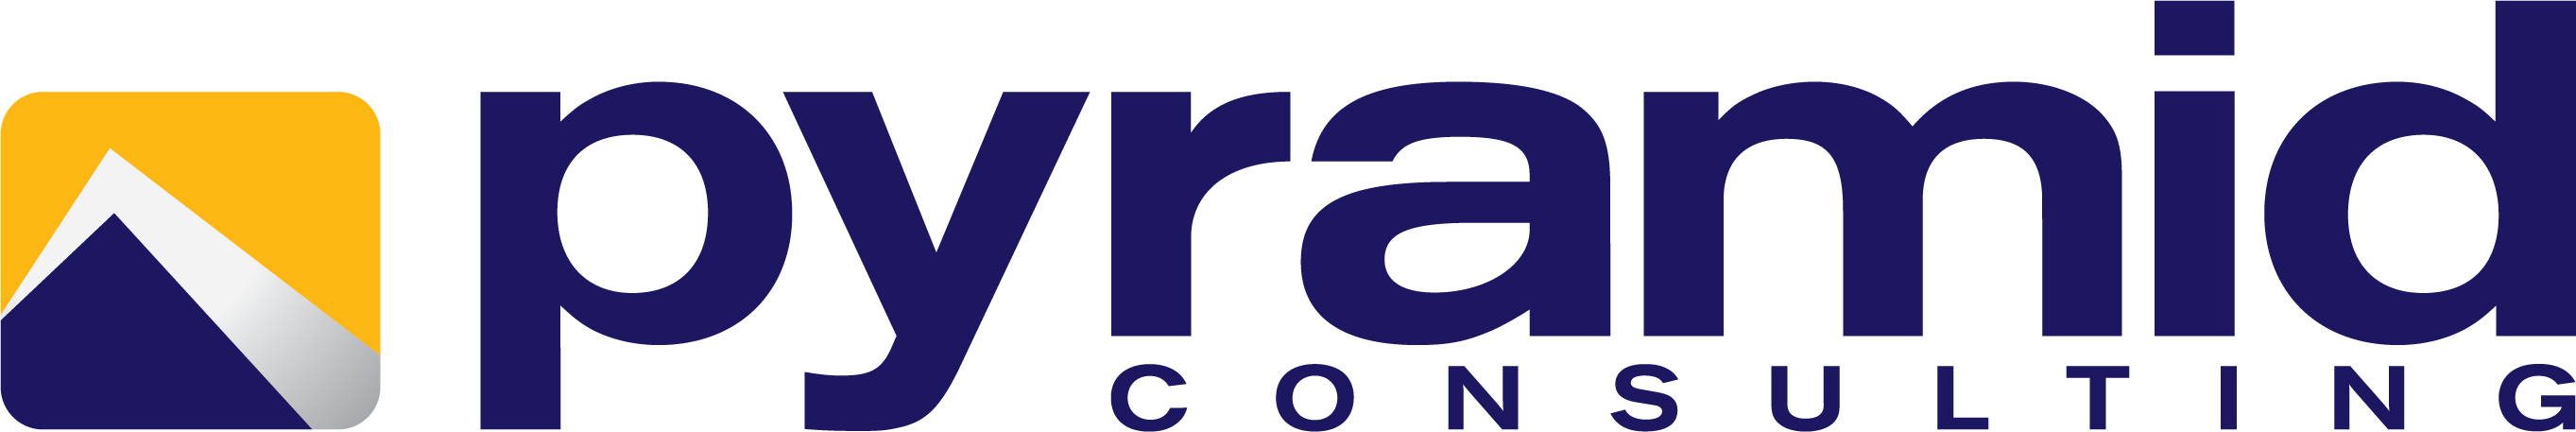 Pyramid Consulting Logo